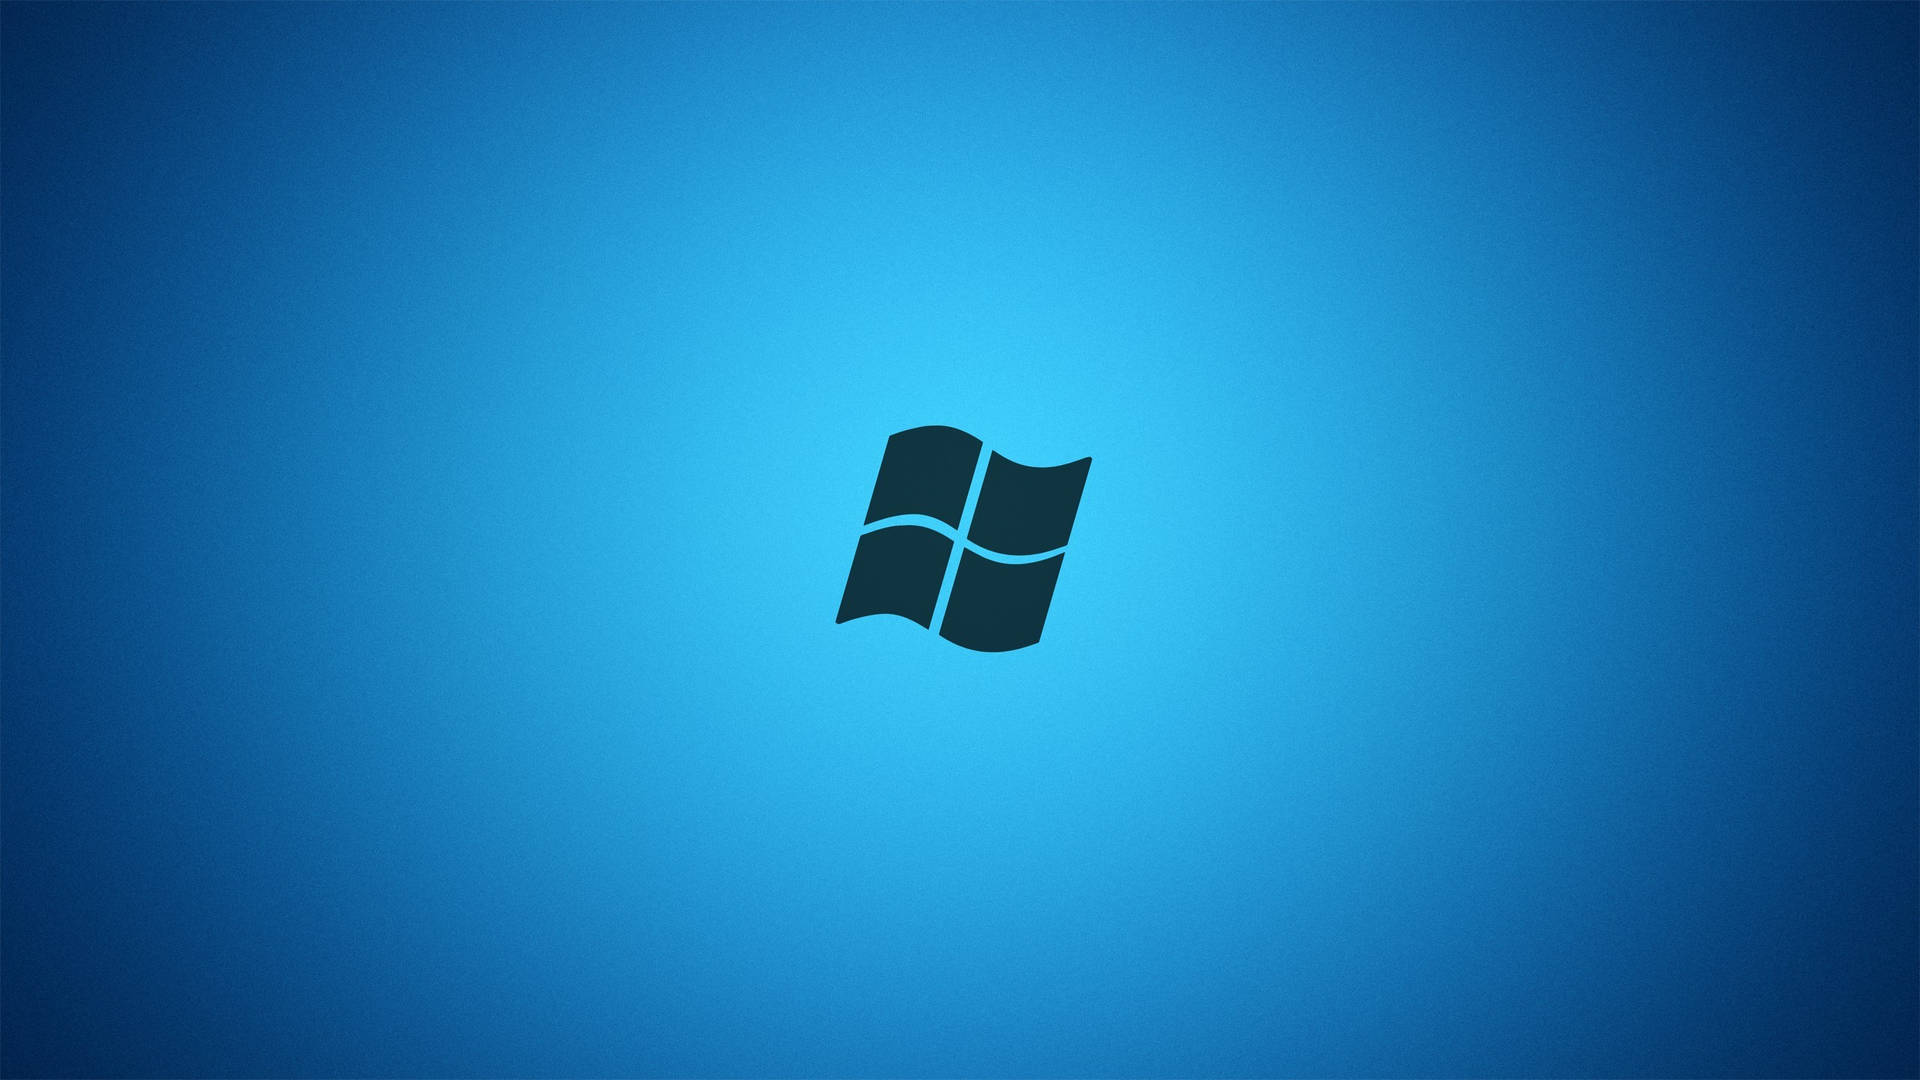 Windows 7 on Midnight Blue and Black Wallpaper